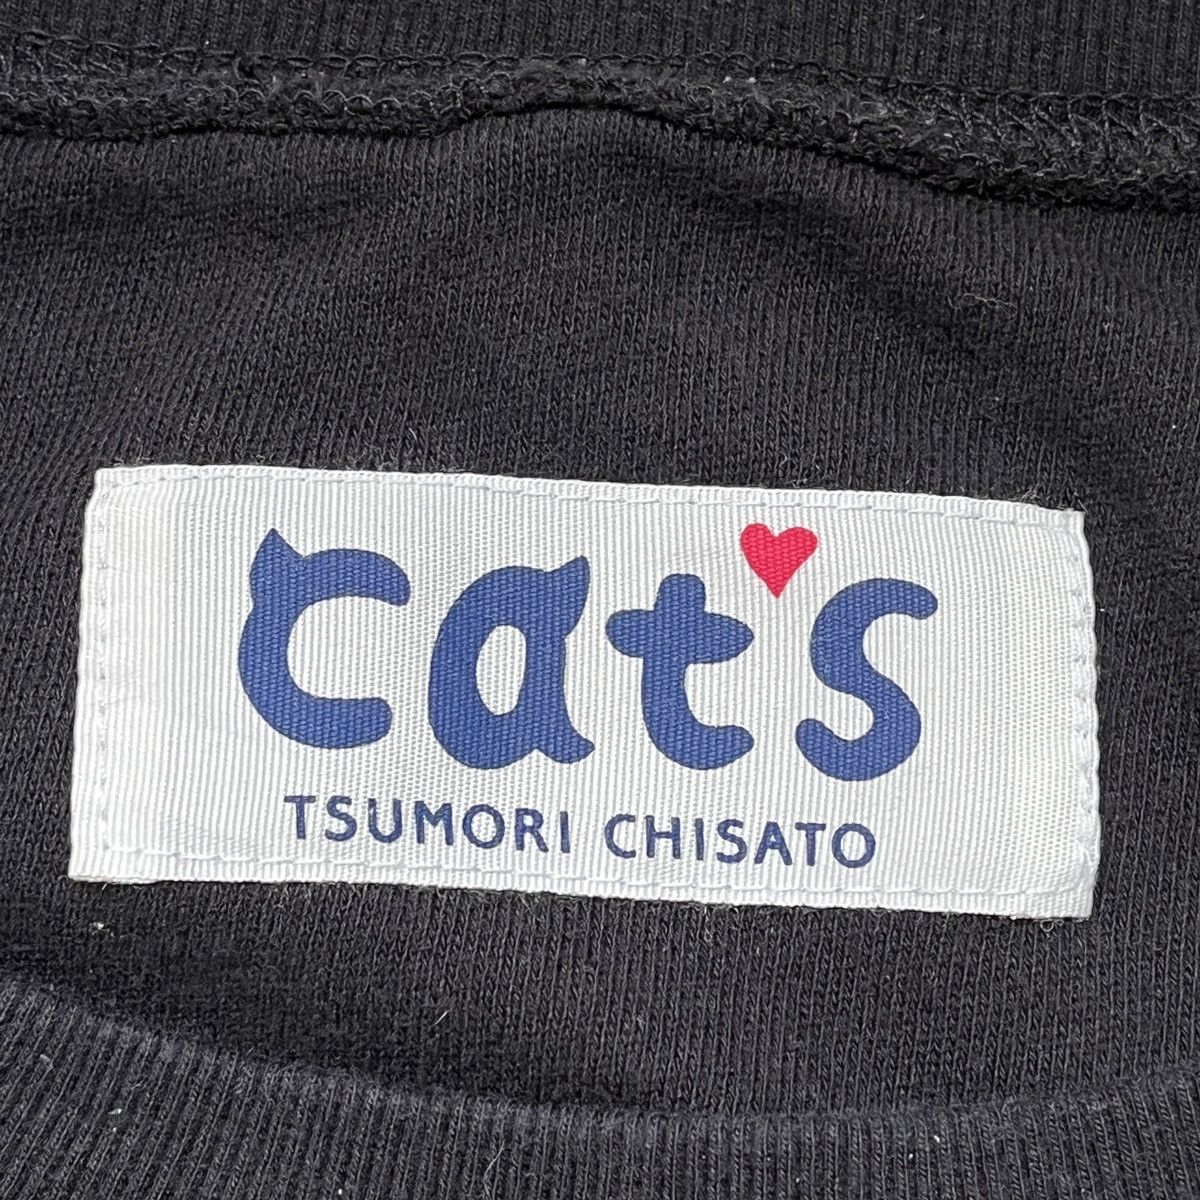 Vintage Cats Tsumori Chisato Long Sleeves Issey Miyake - 6